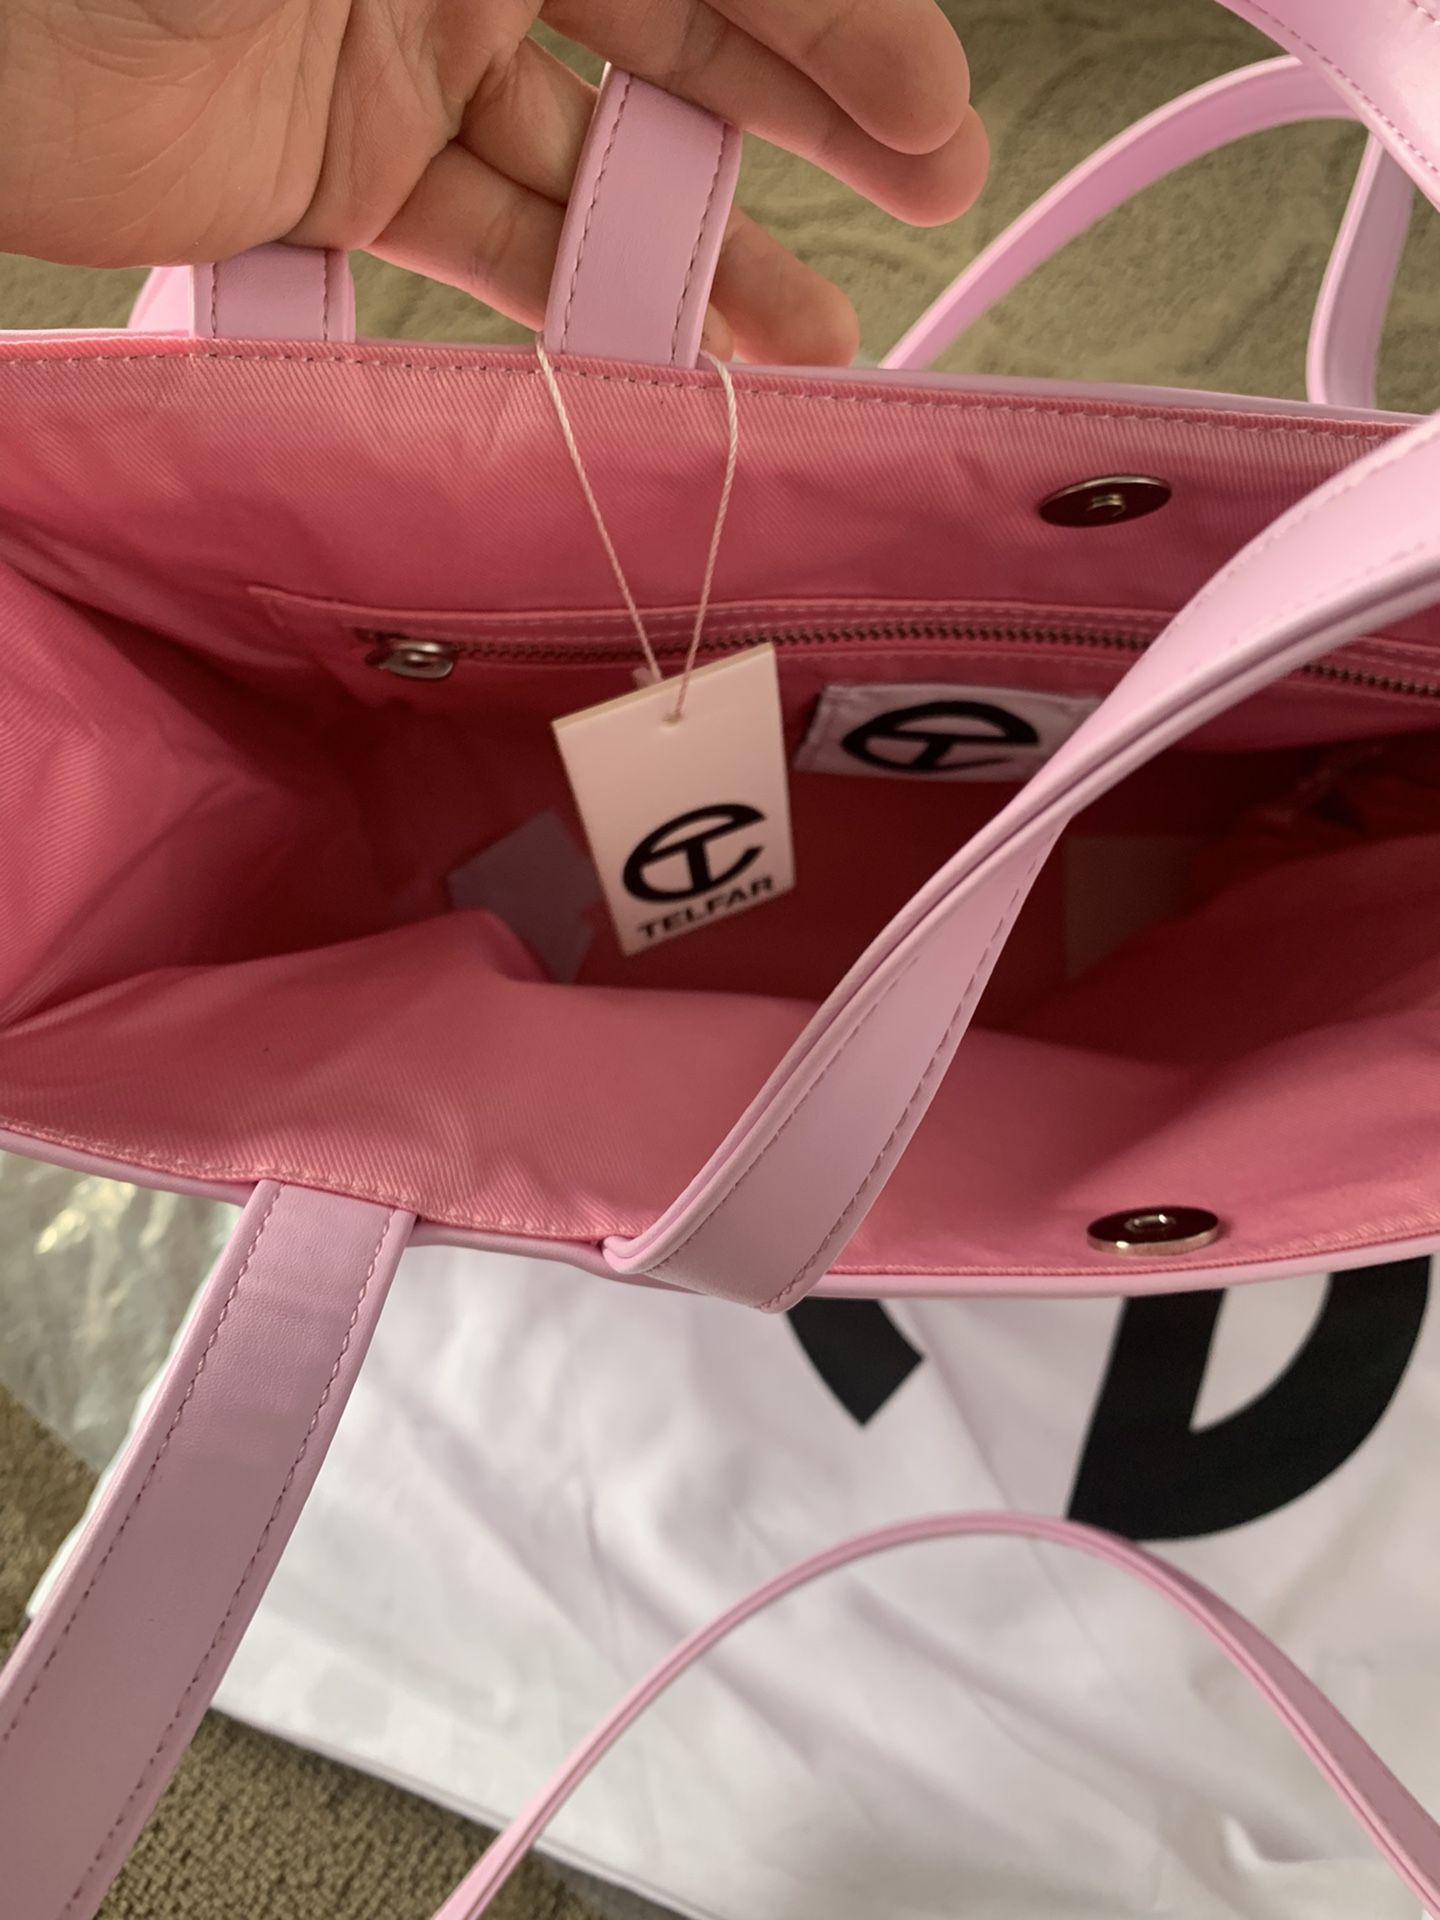 Bubblegum Pink TELFAR (medium) bag for Sale in Lemon Grove, CA - OfferUp